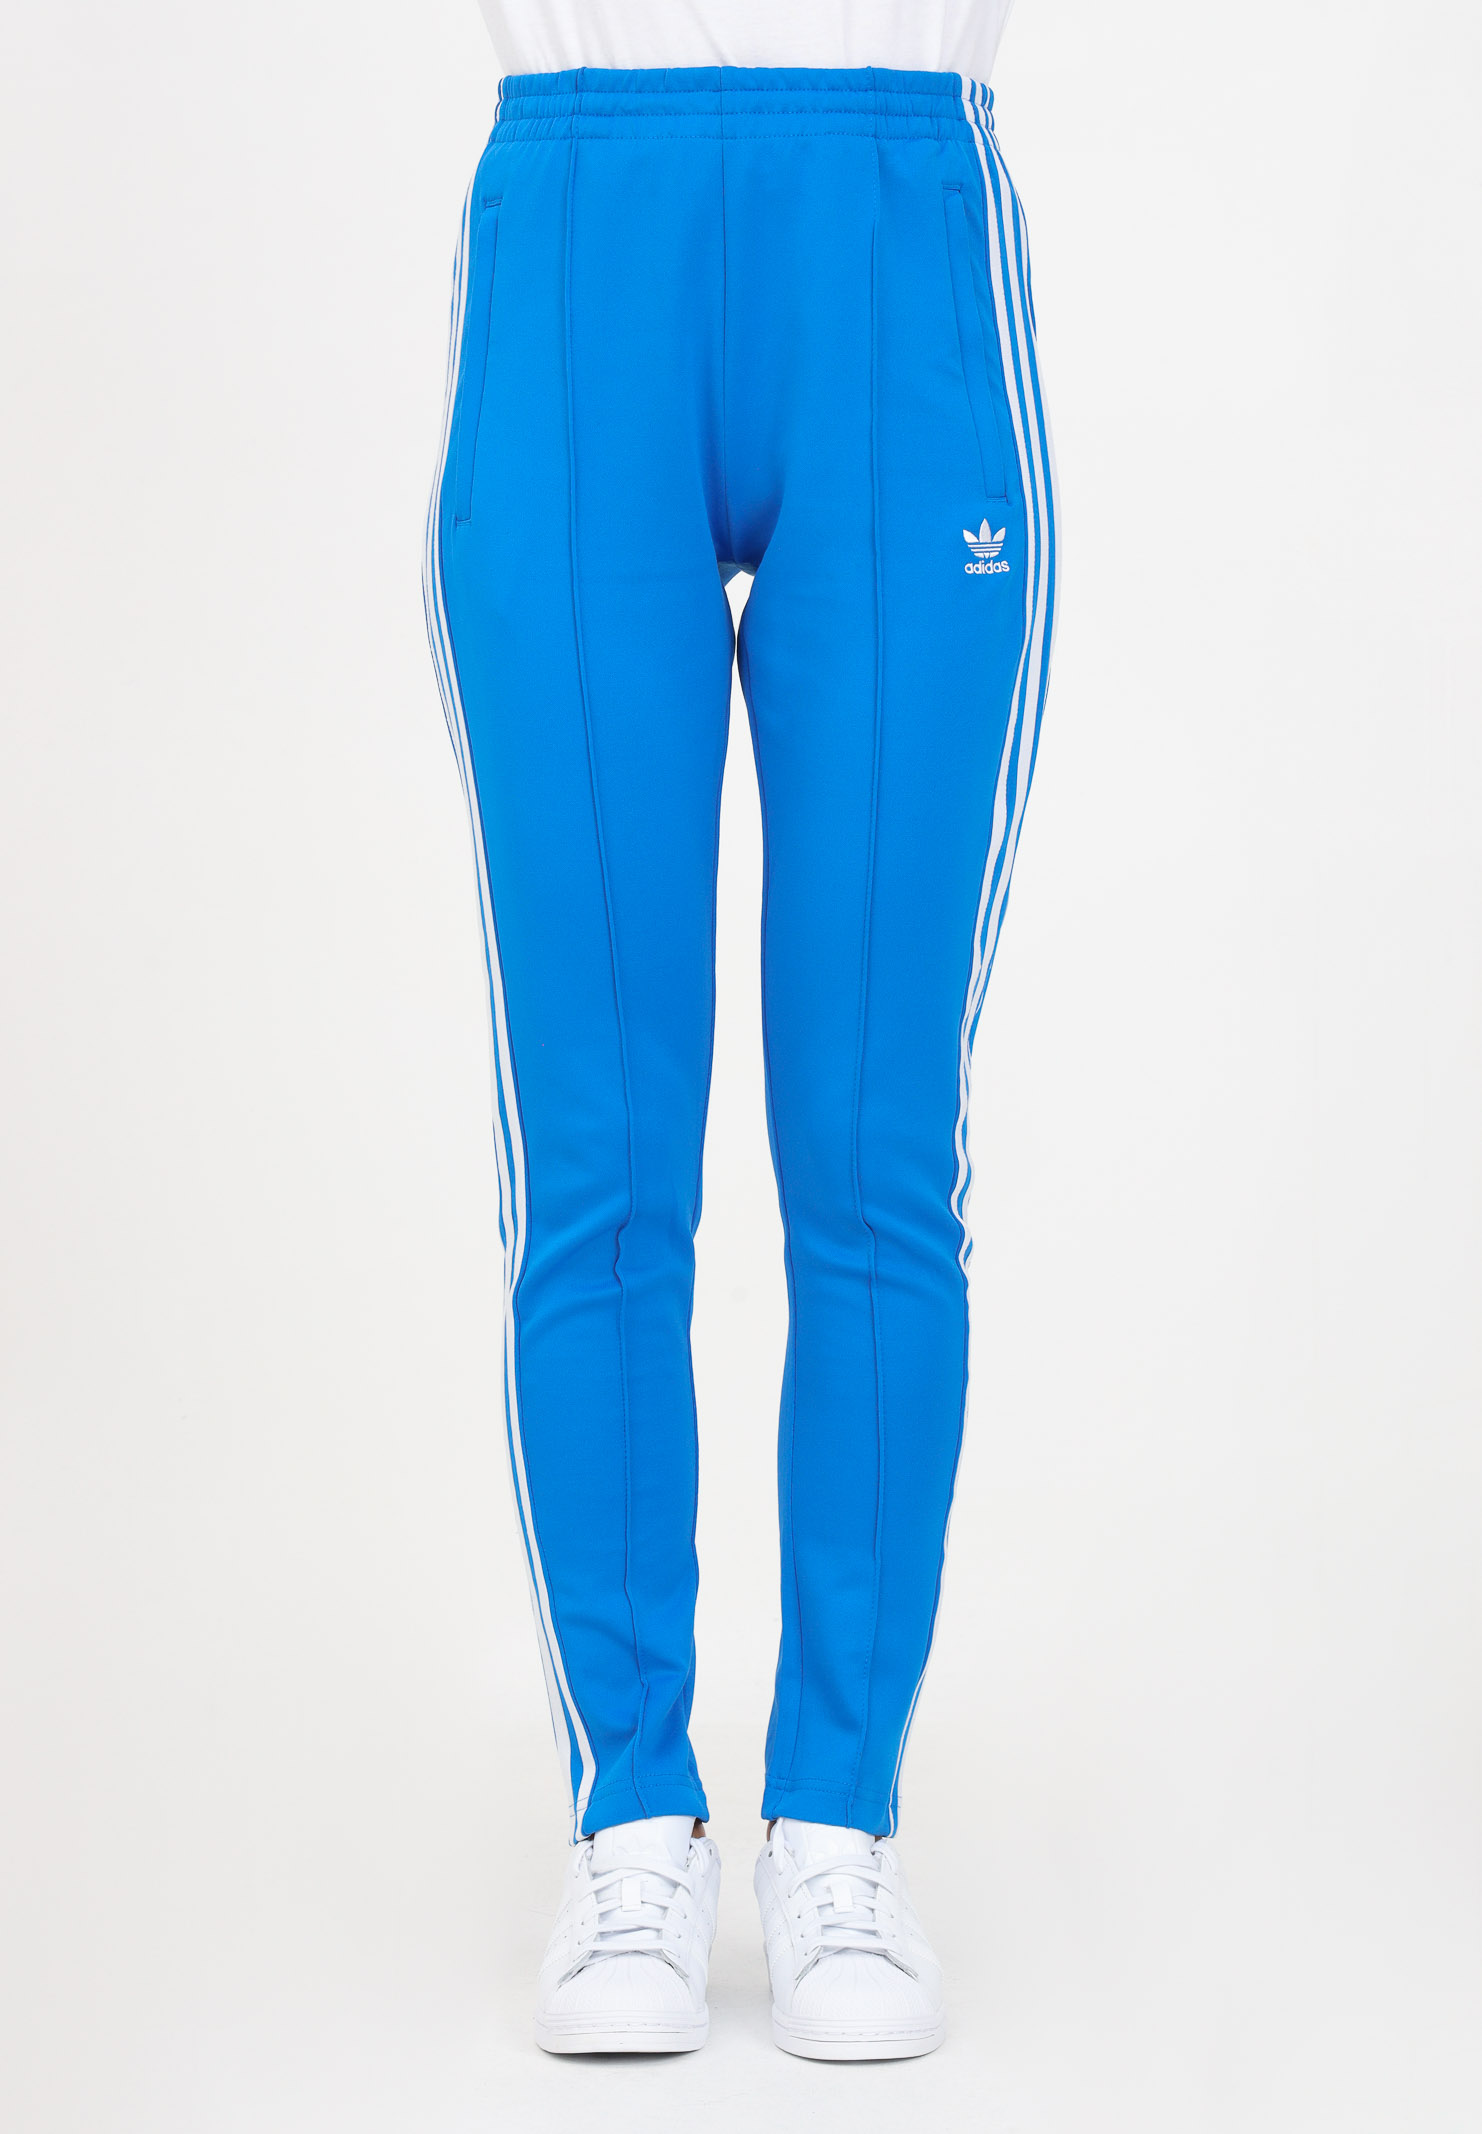 Blue women's trousersTrack pants Adicolor SST - ADIDAS ORIGINALS - Pavidas